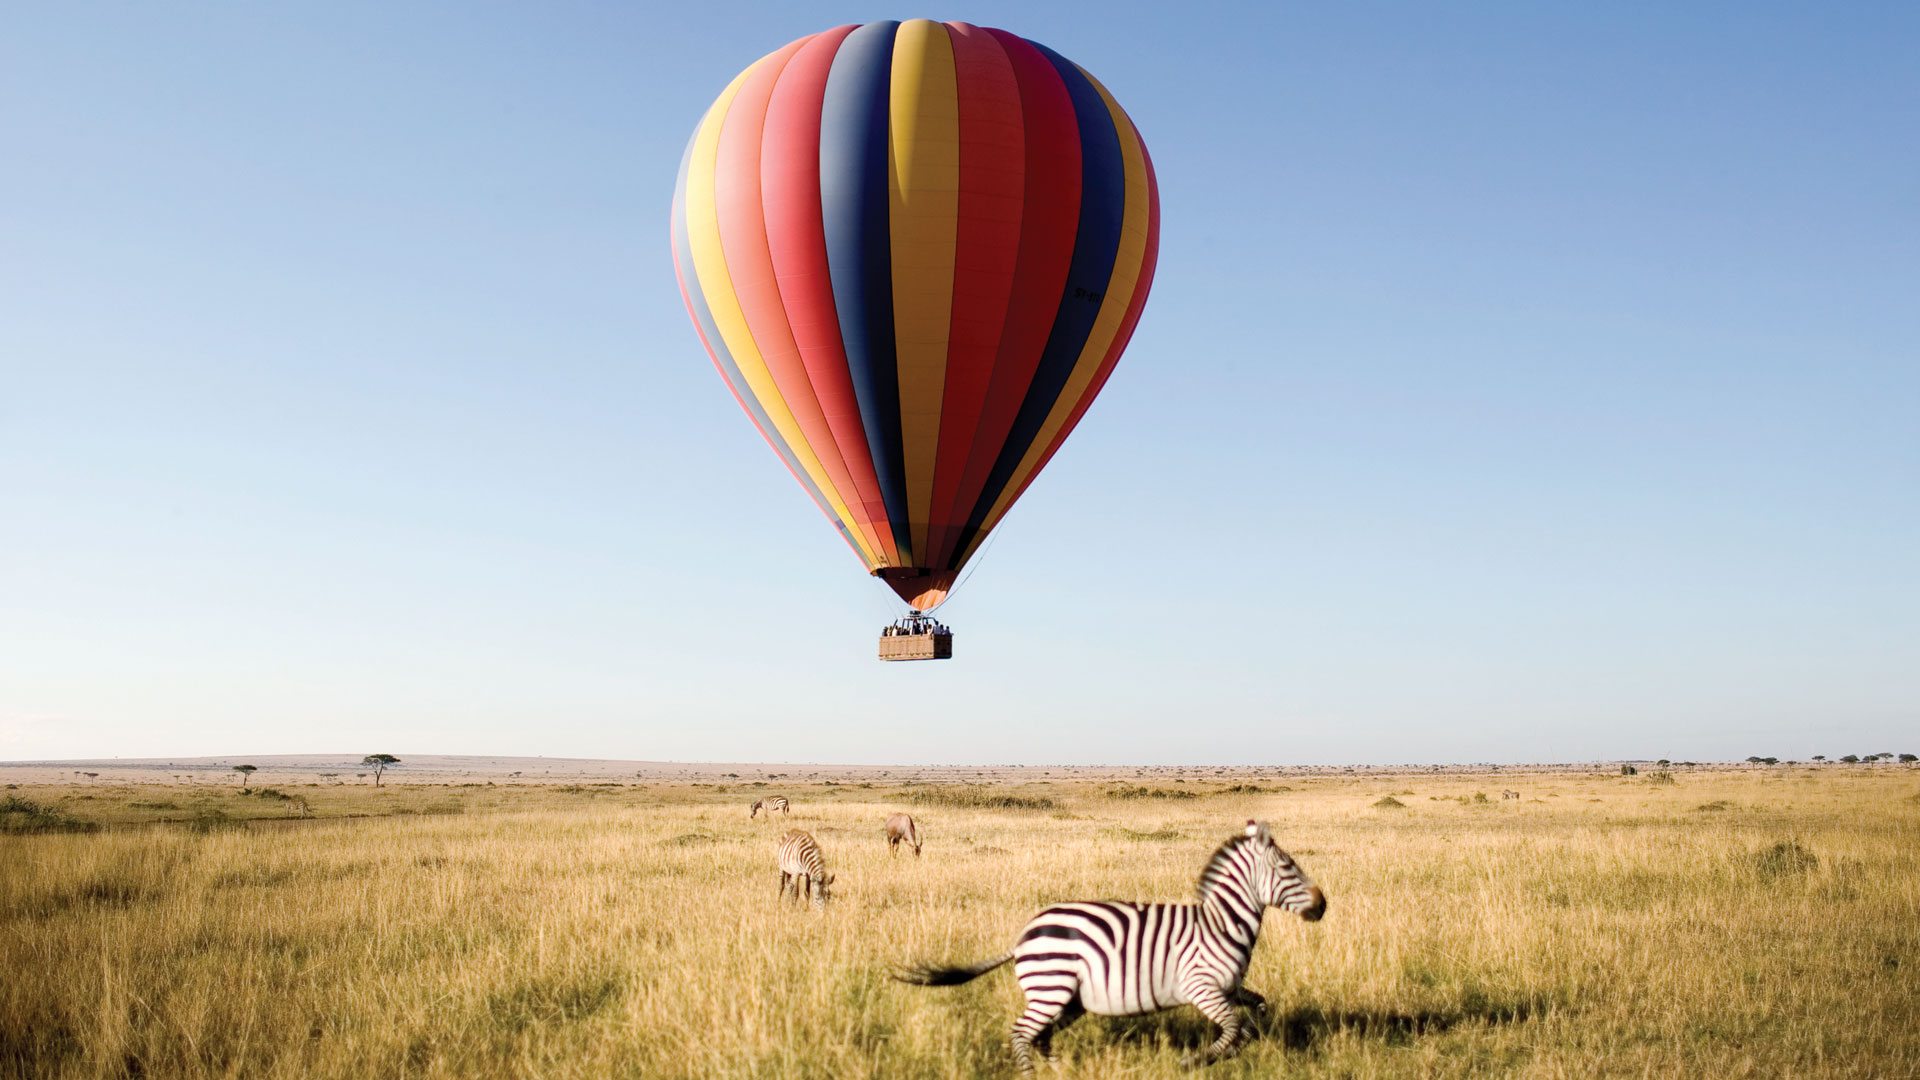 Ngorongoro Crater Hot Air Balloon